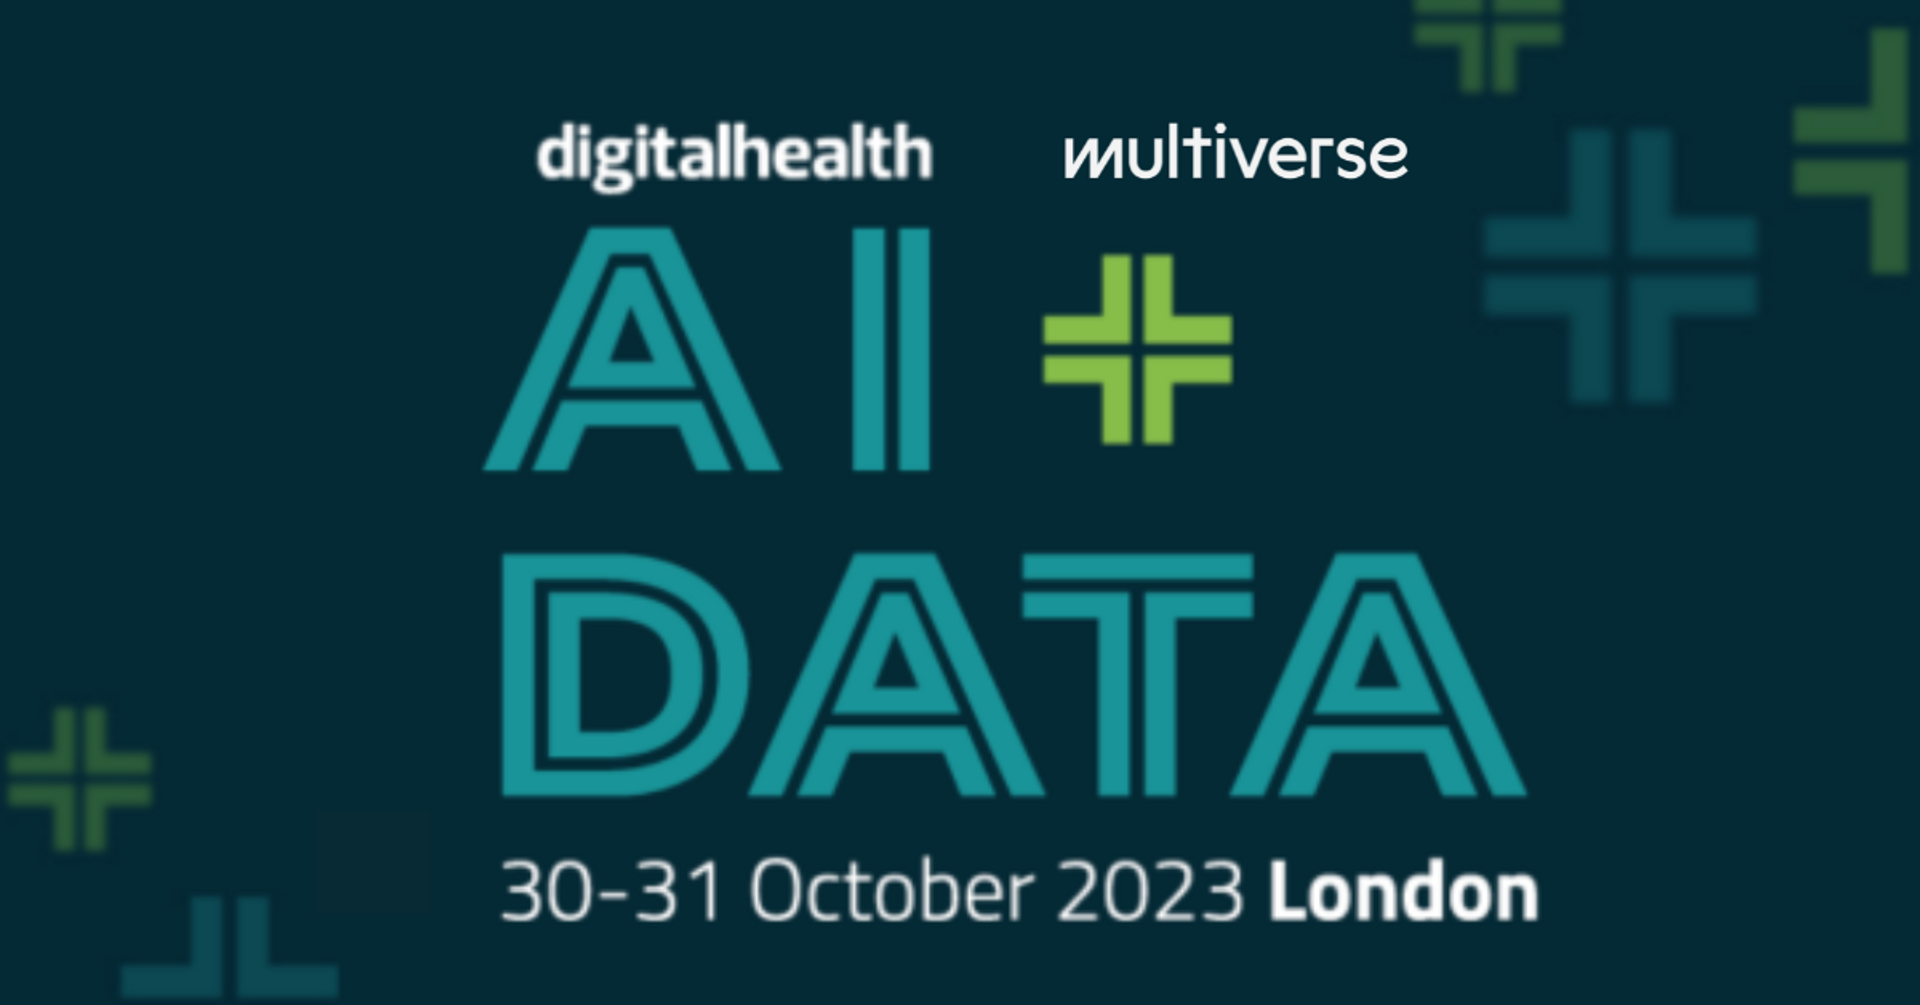 Multiverse at Digital health Ai and Data